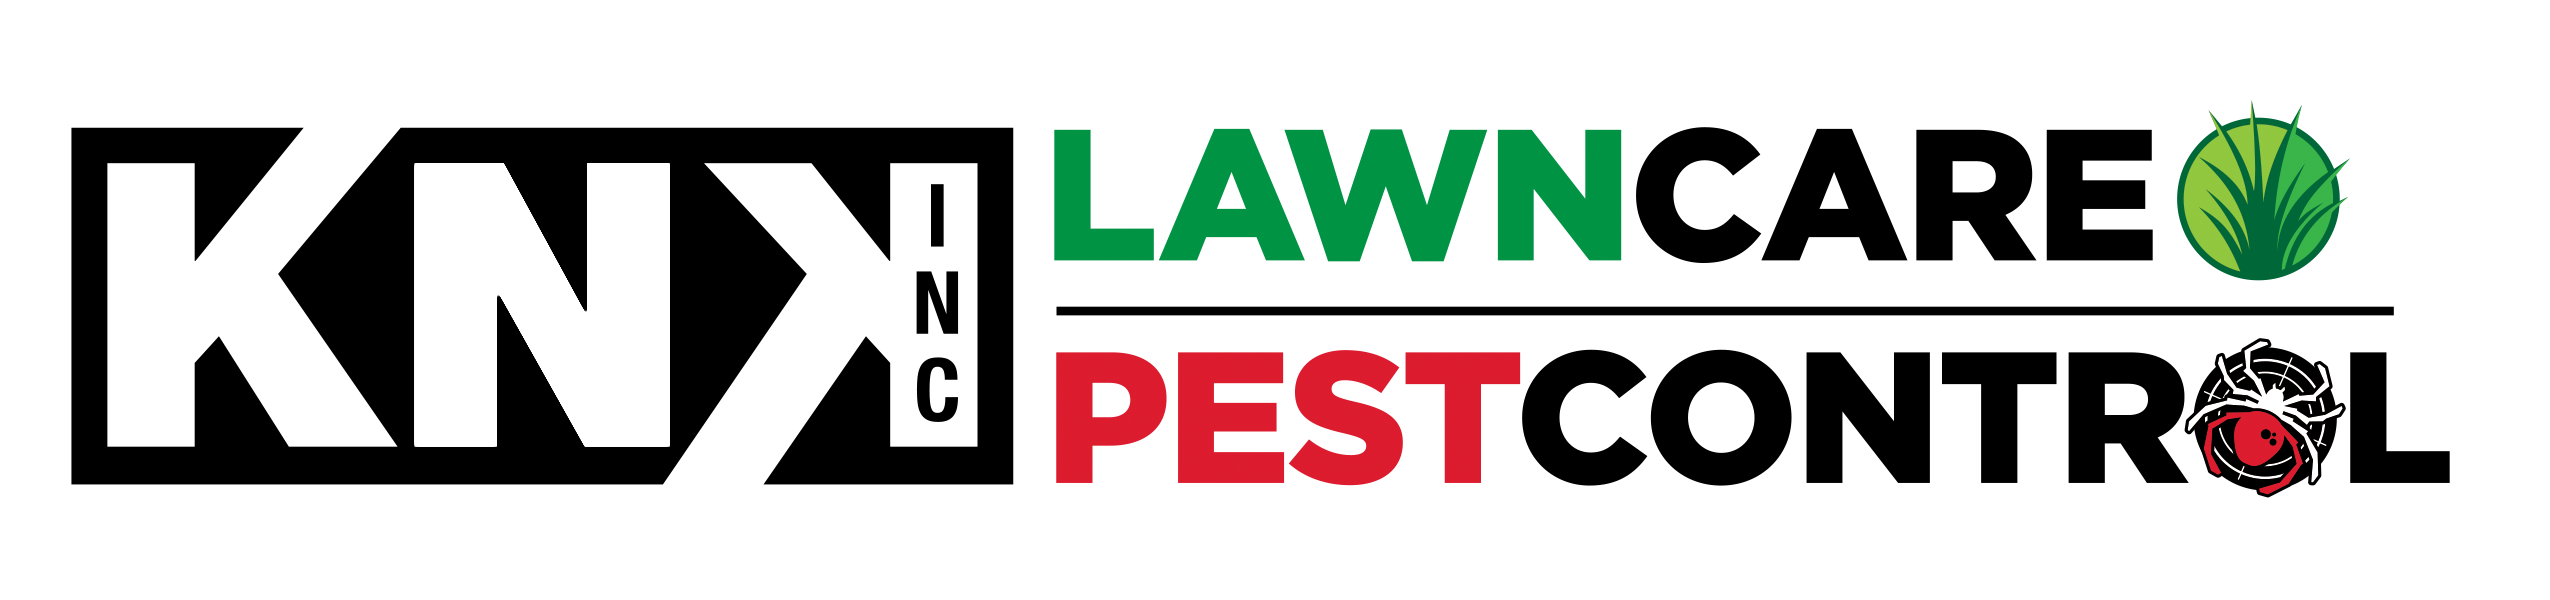 KnK Lawn Care & Pest Control